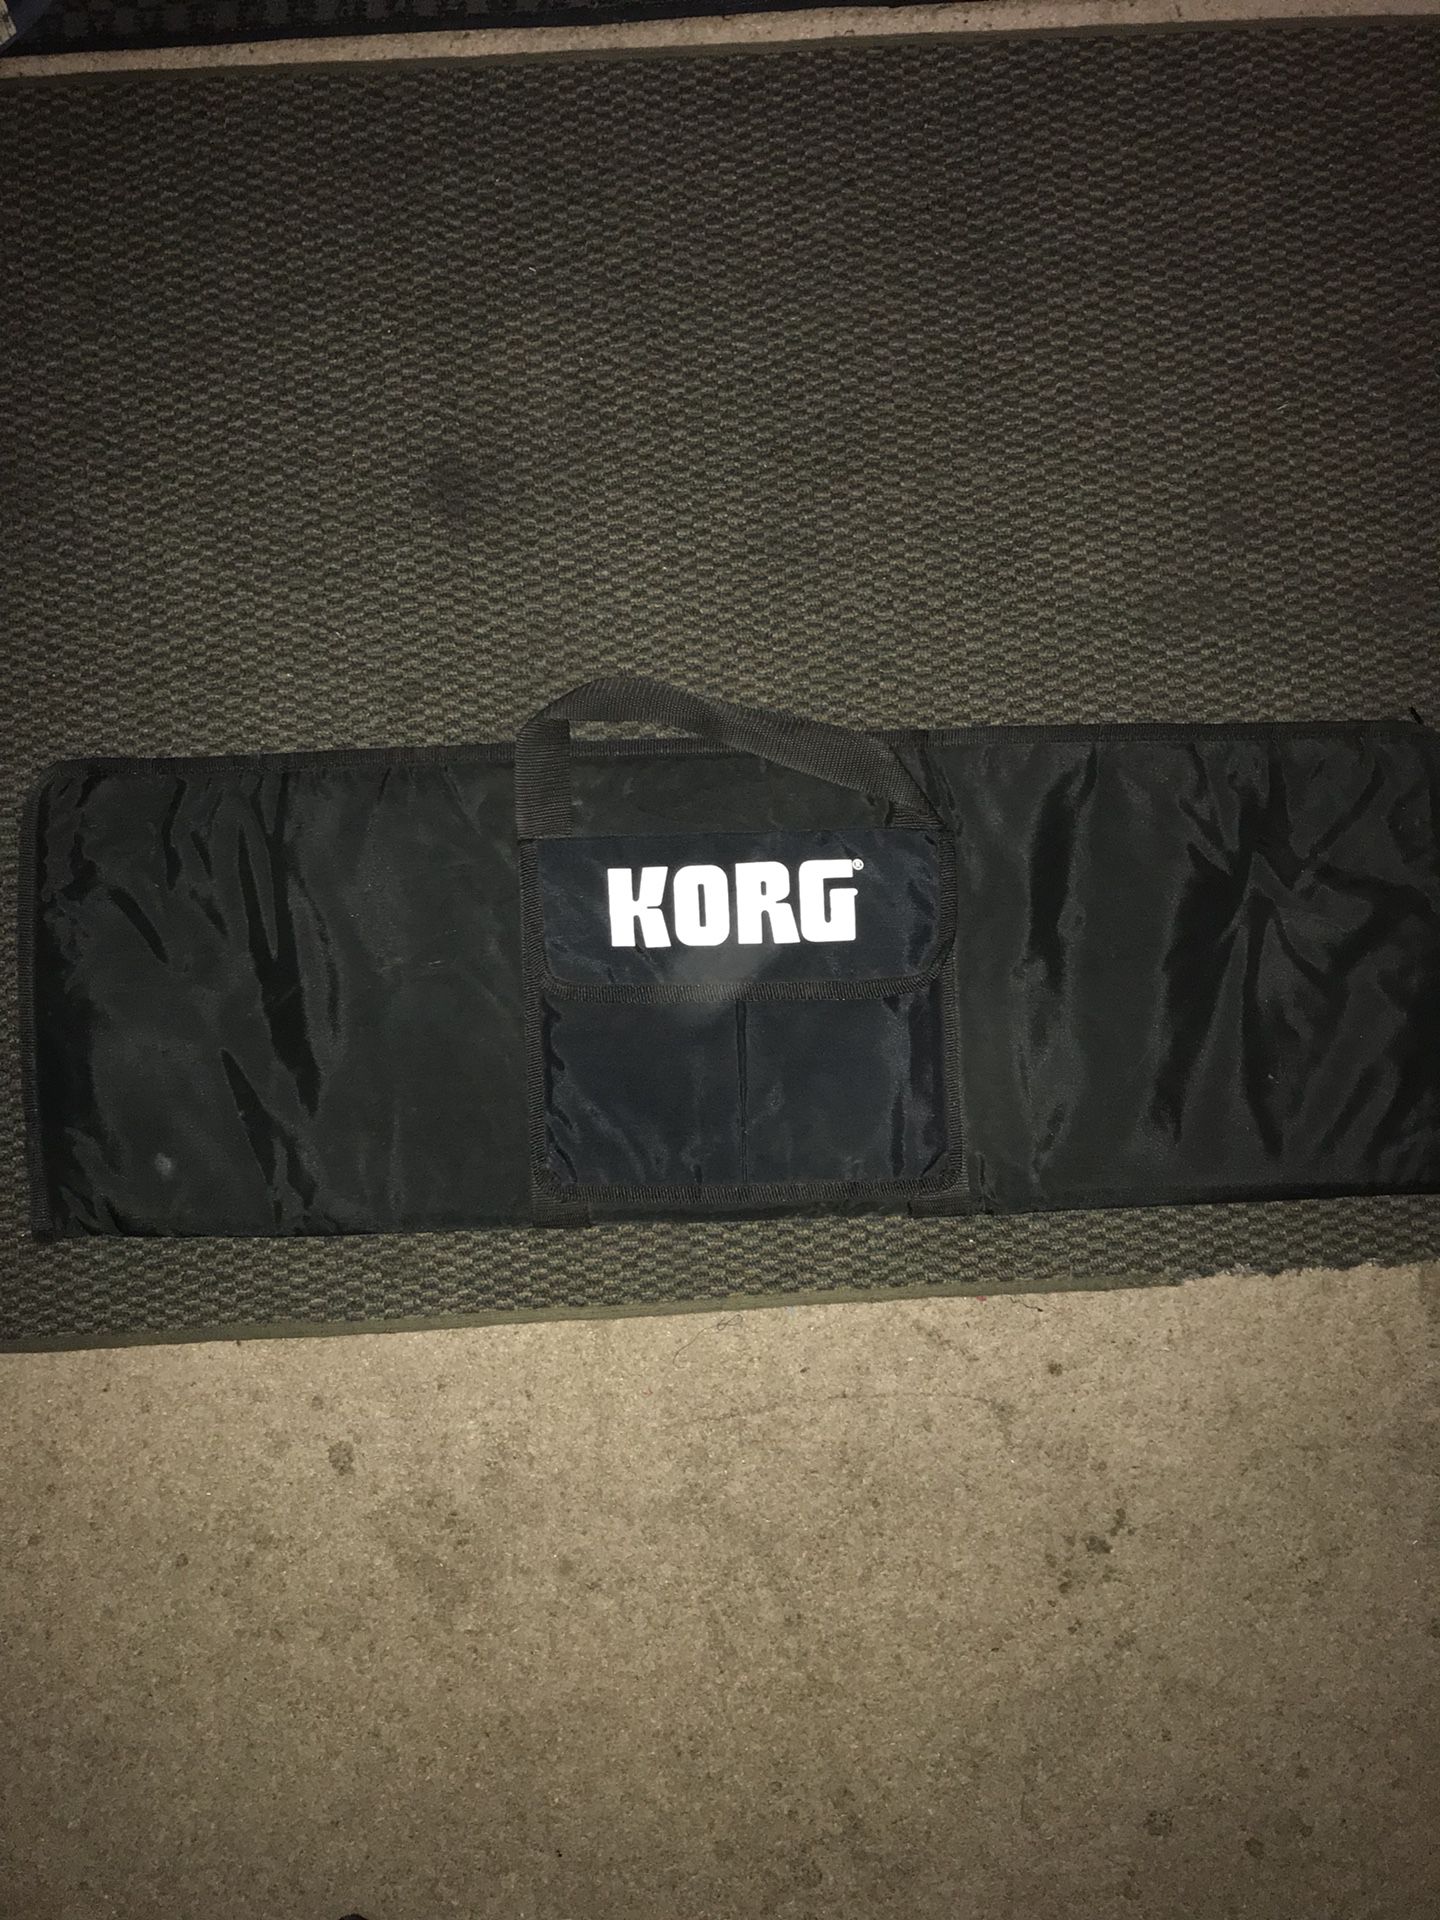 kORG keyboard bag